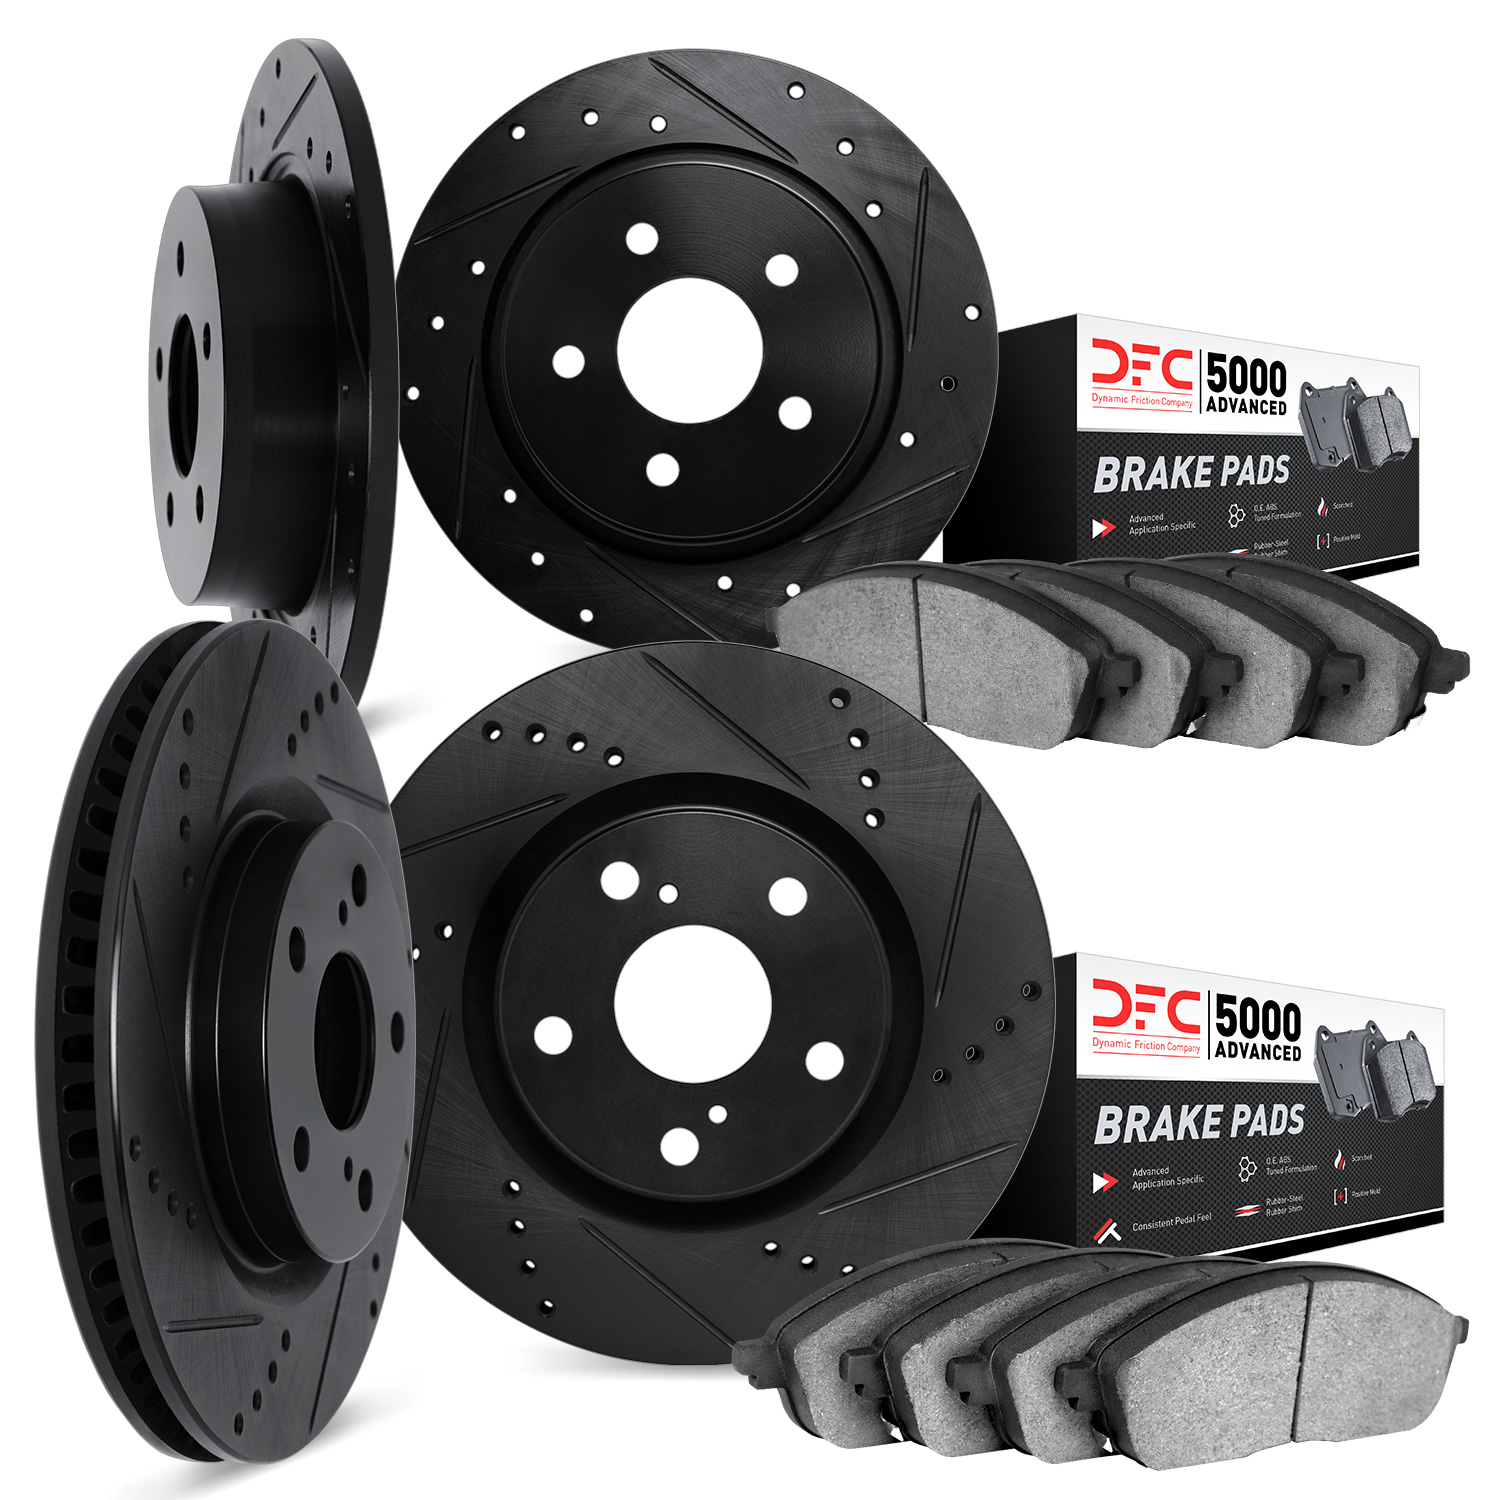 8504-42064 Drilled/Slotted Brake Rotors w/5000 Advanced Brake Pads Kit [Black], 1999-2002 Mopar, Position: Front and Rear